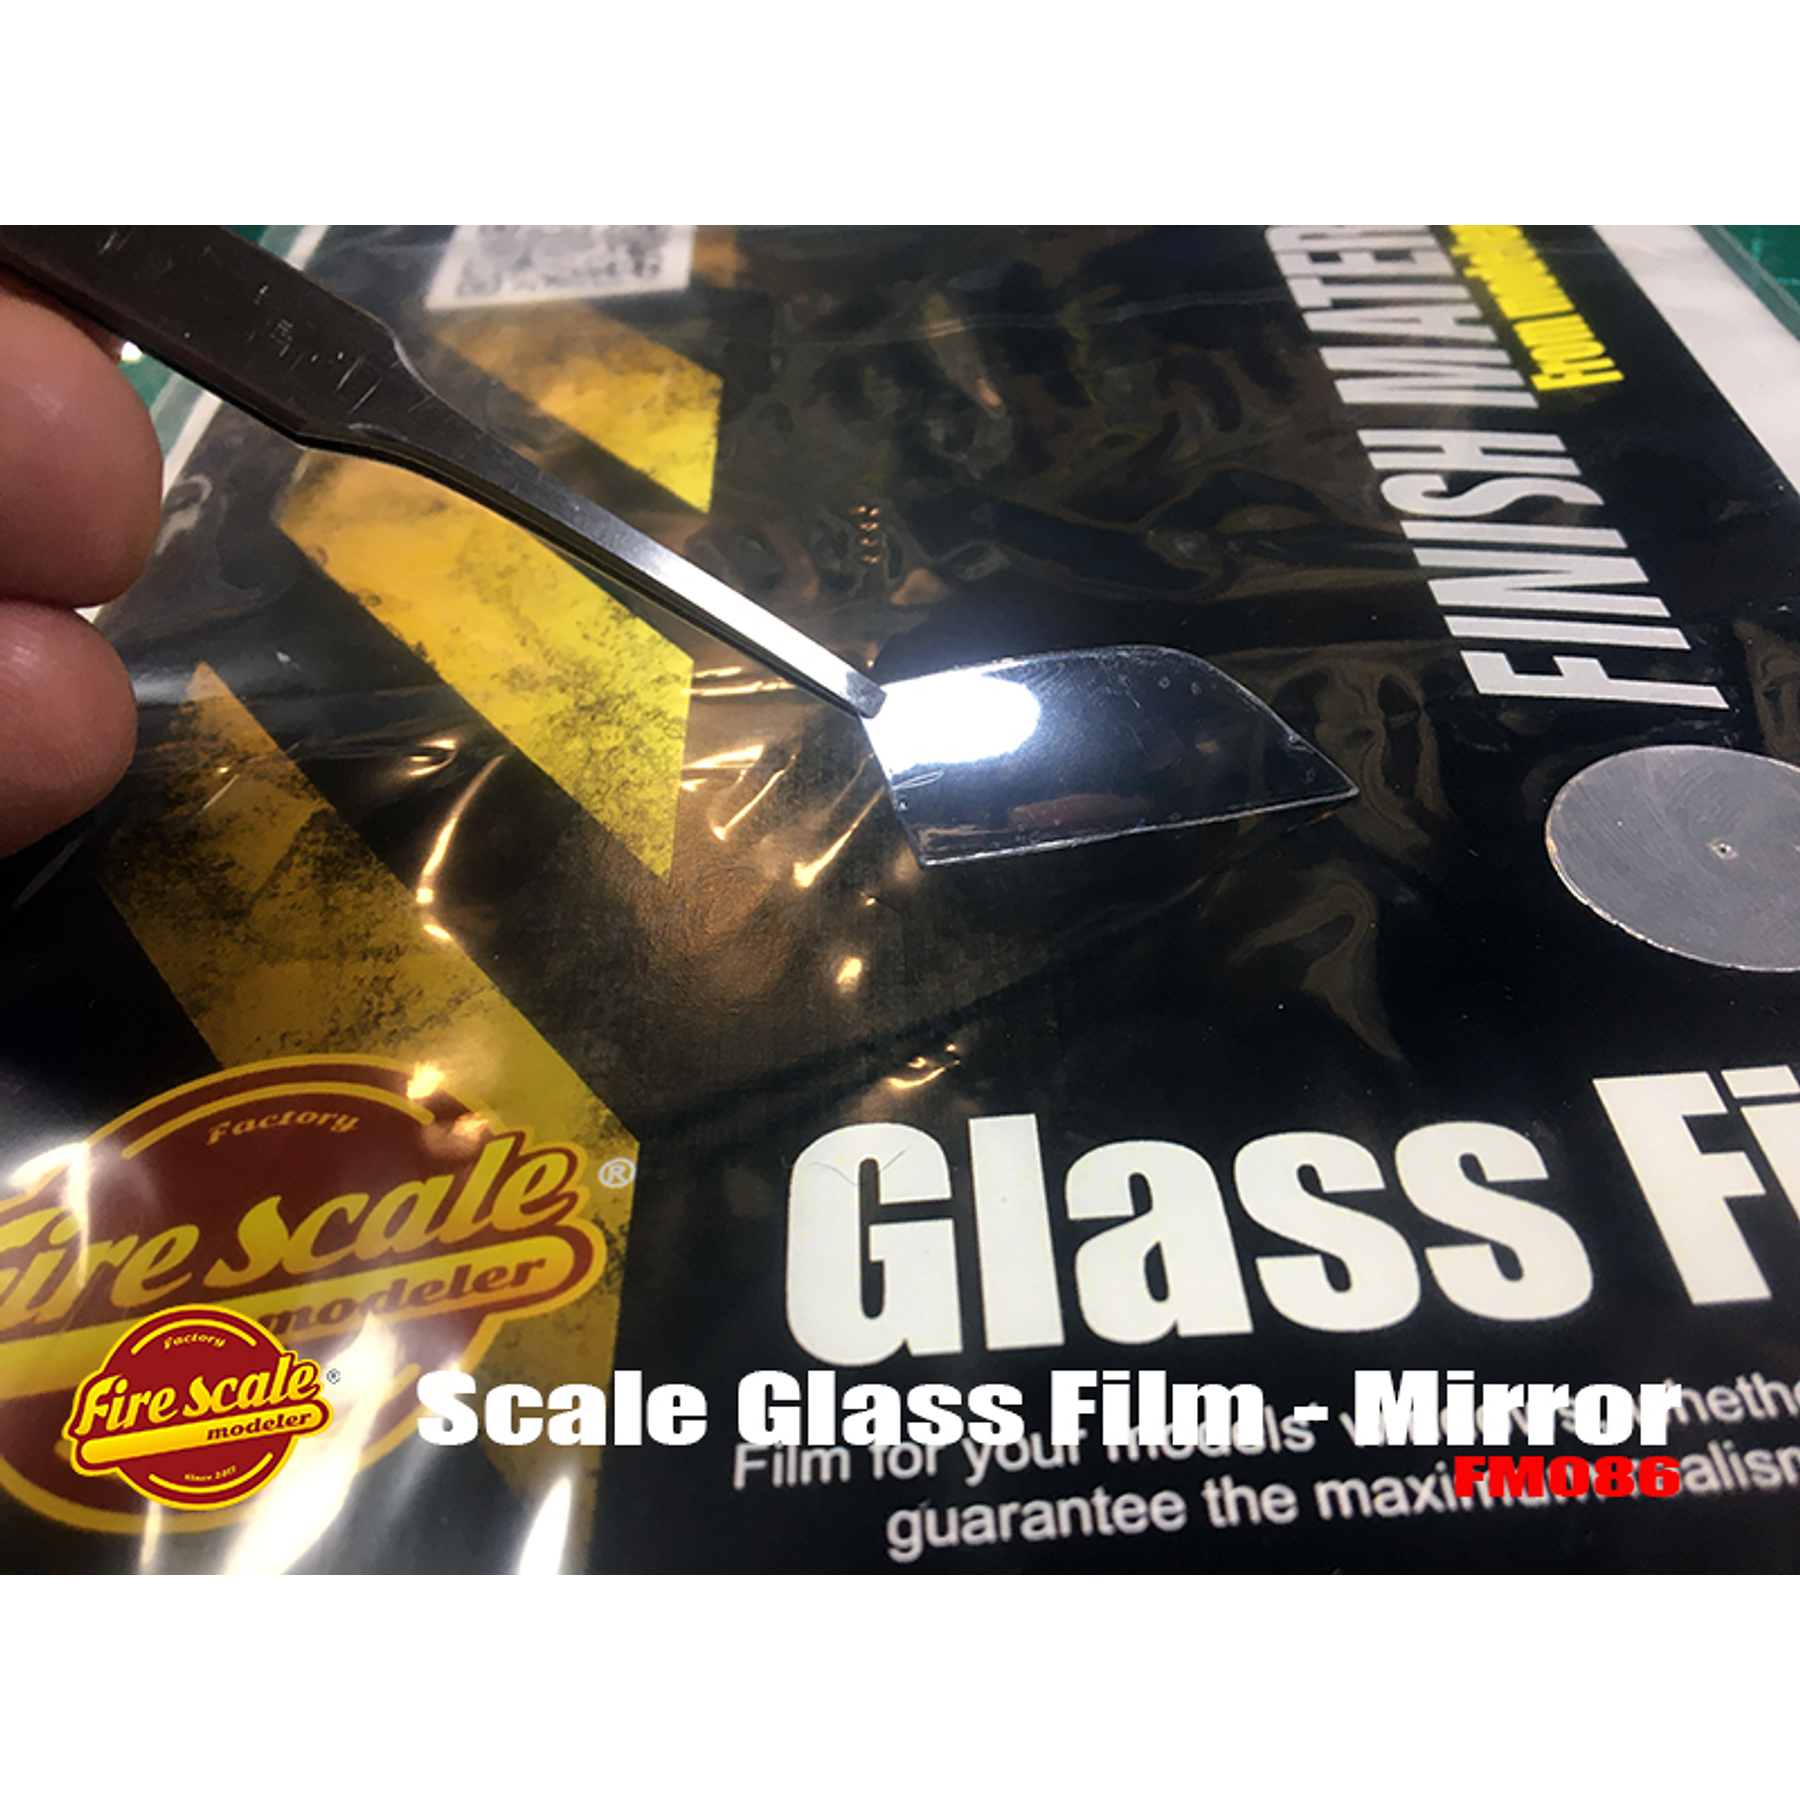 Scale Glass Film